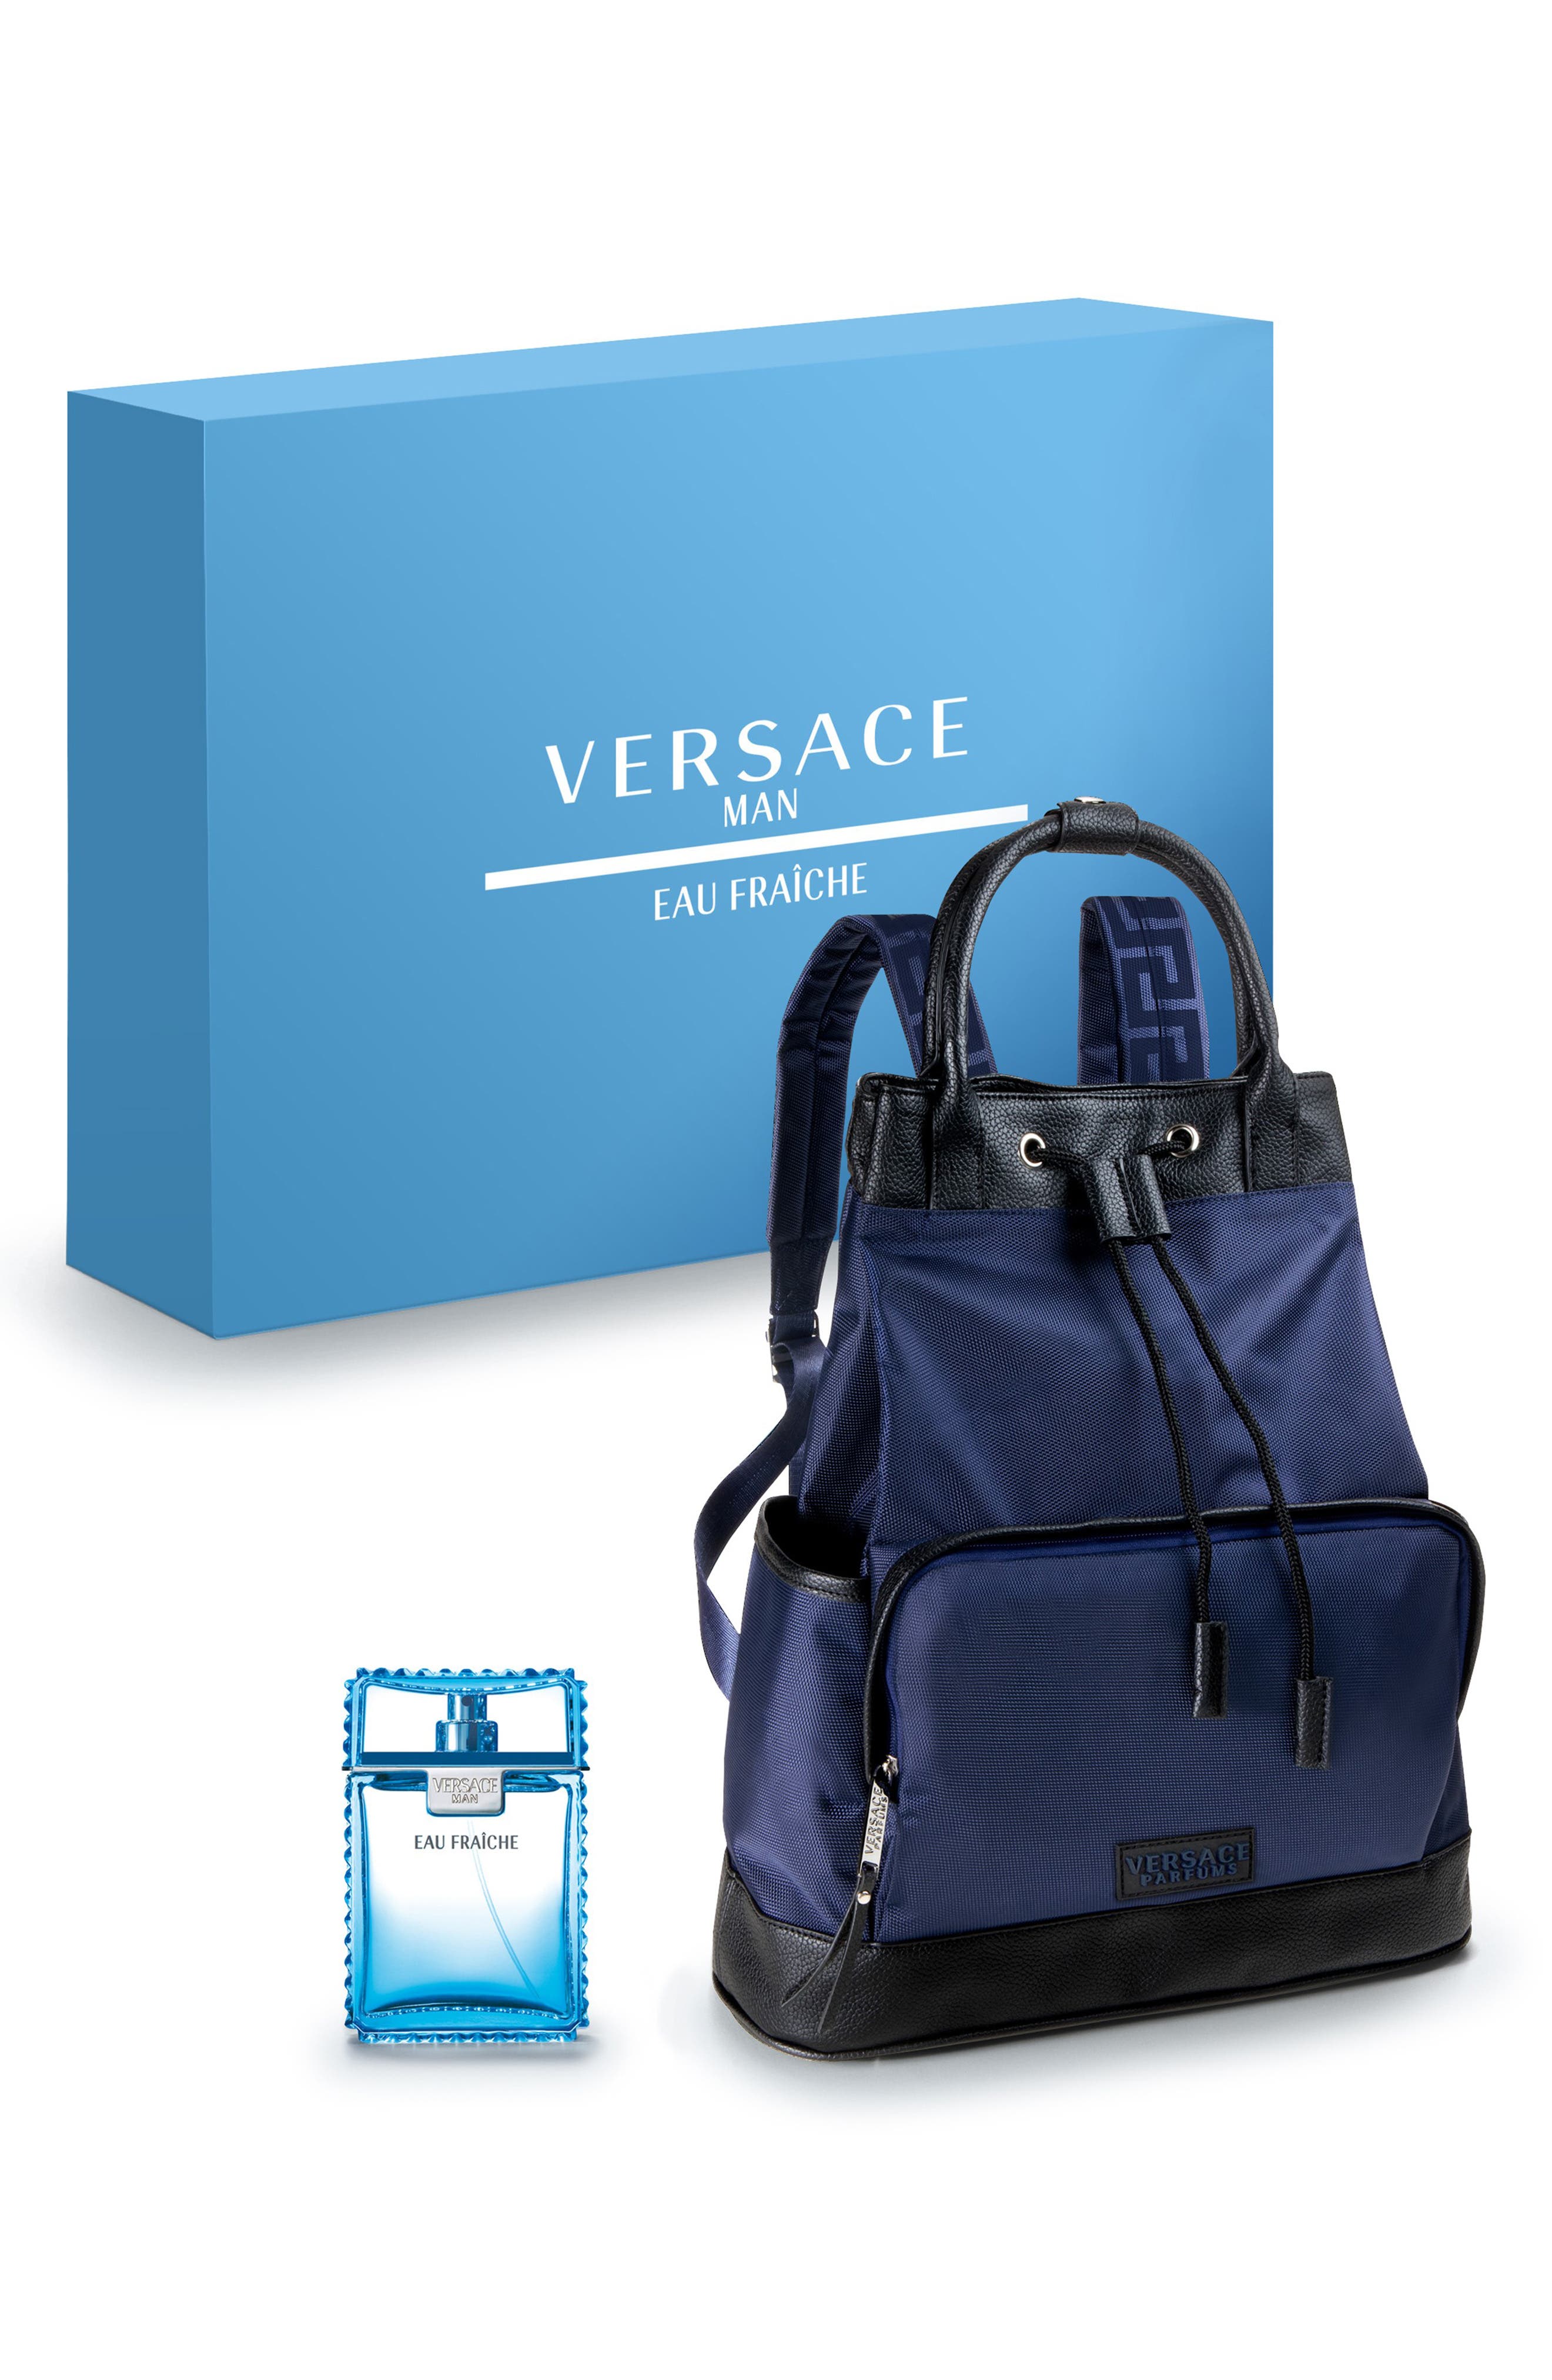 versace fragrance backpack